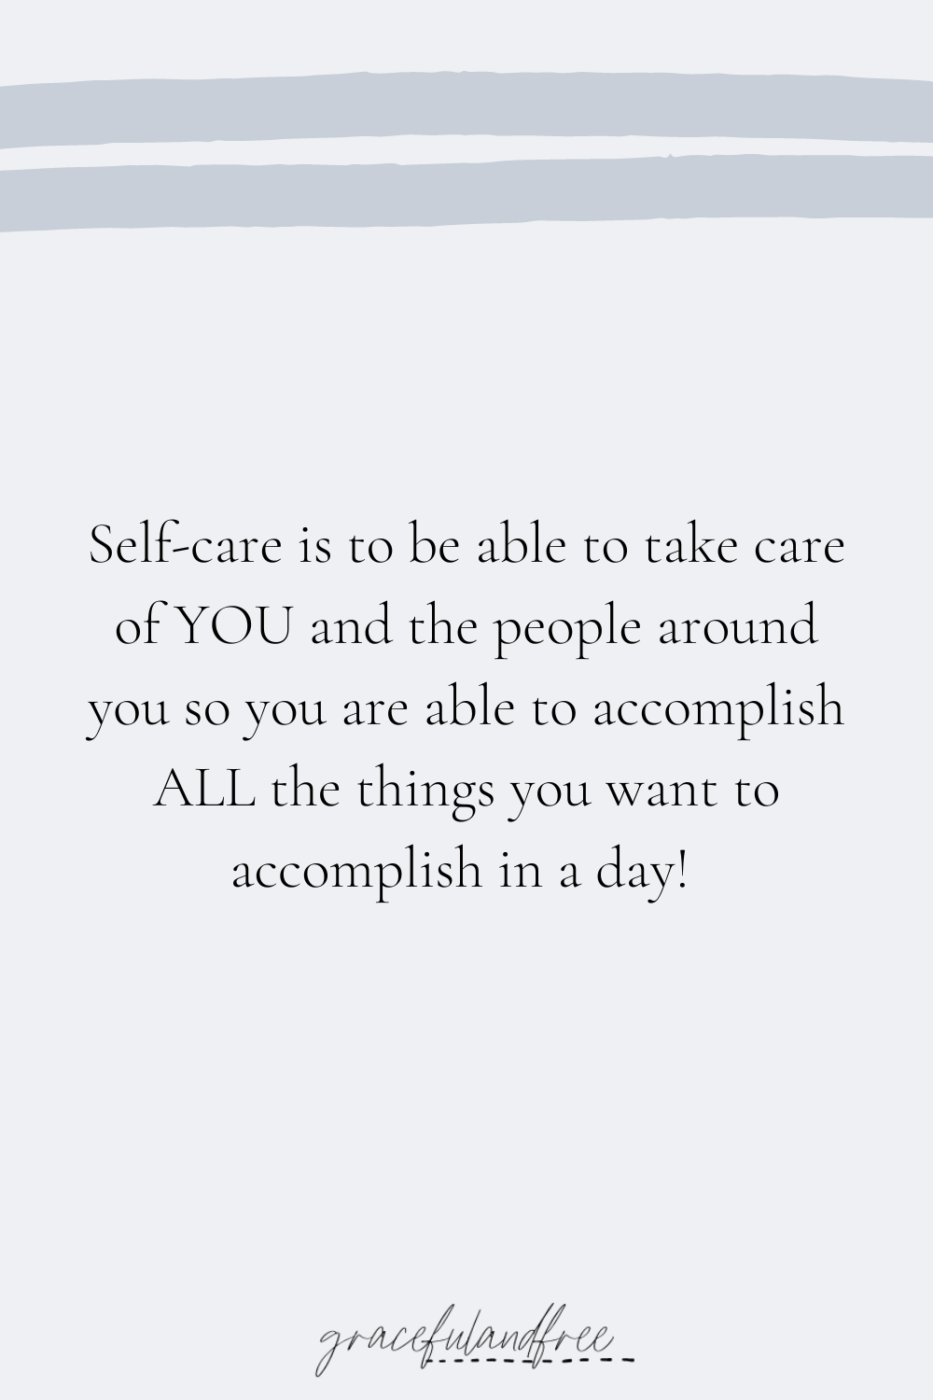 secrets to self-care